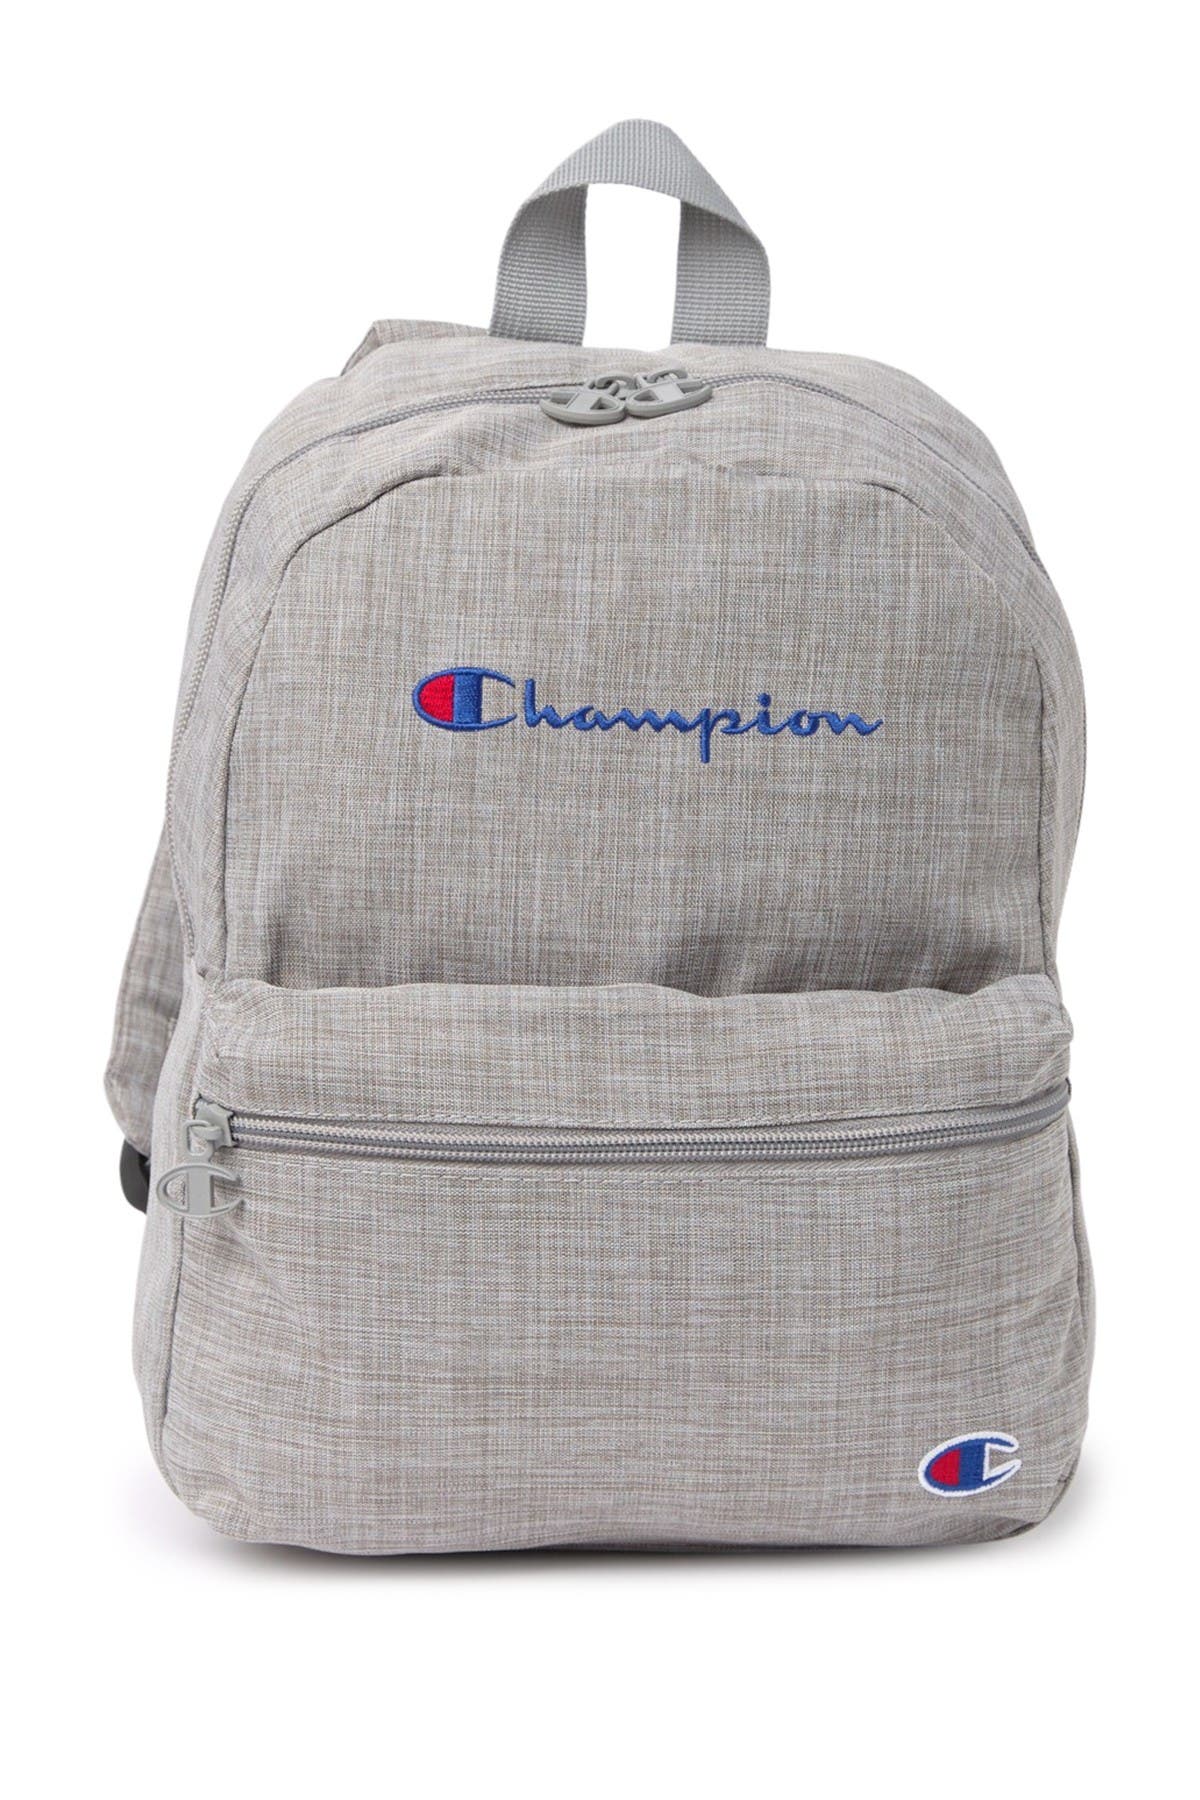 champion backpack nordstrom